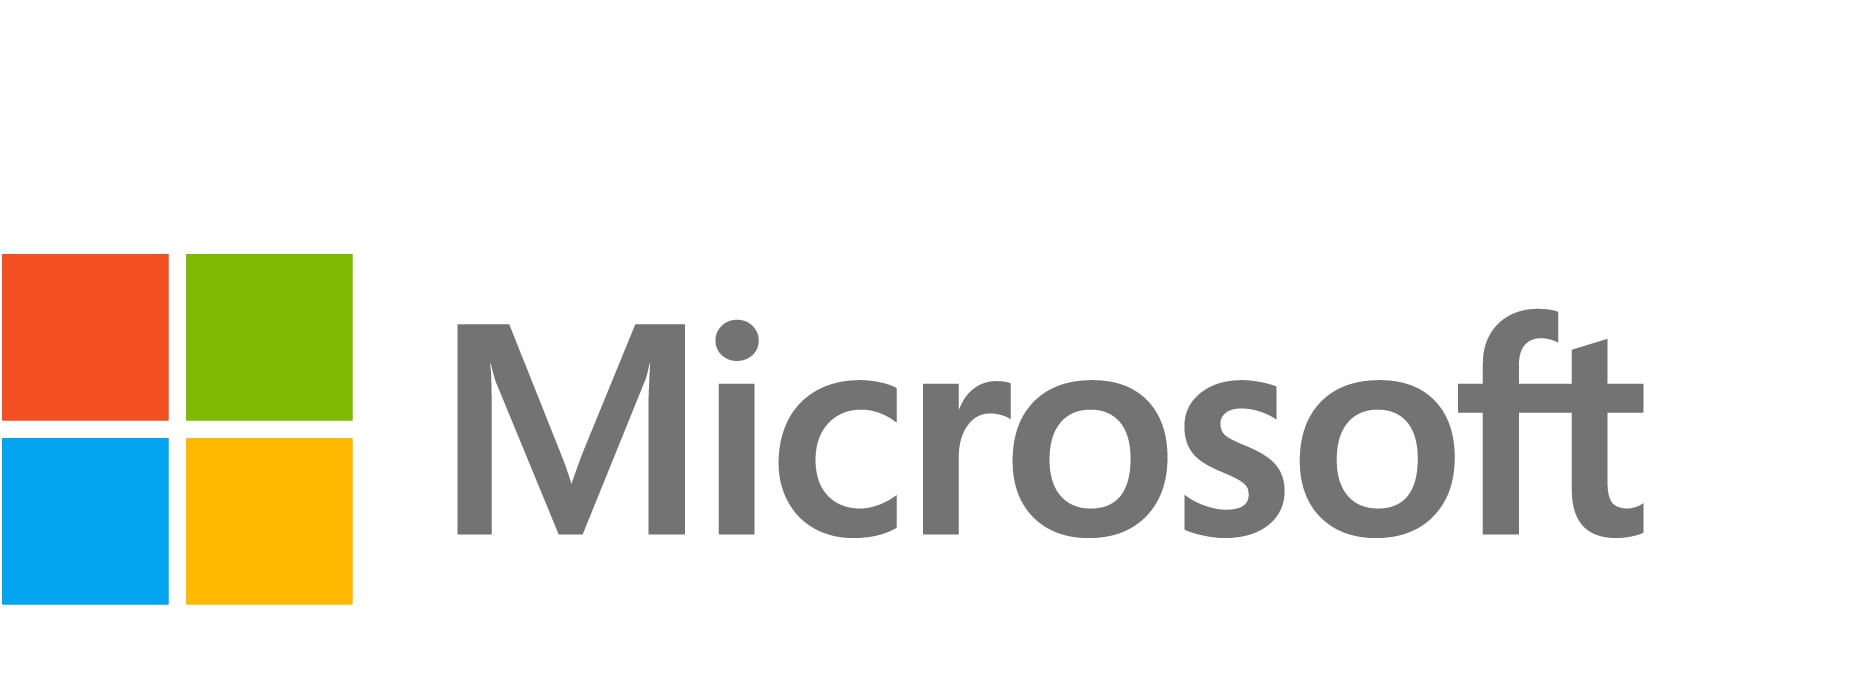 Microsoft Windows Server Standard Edition - license & software assurance -